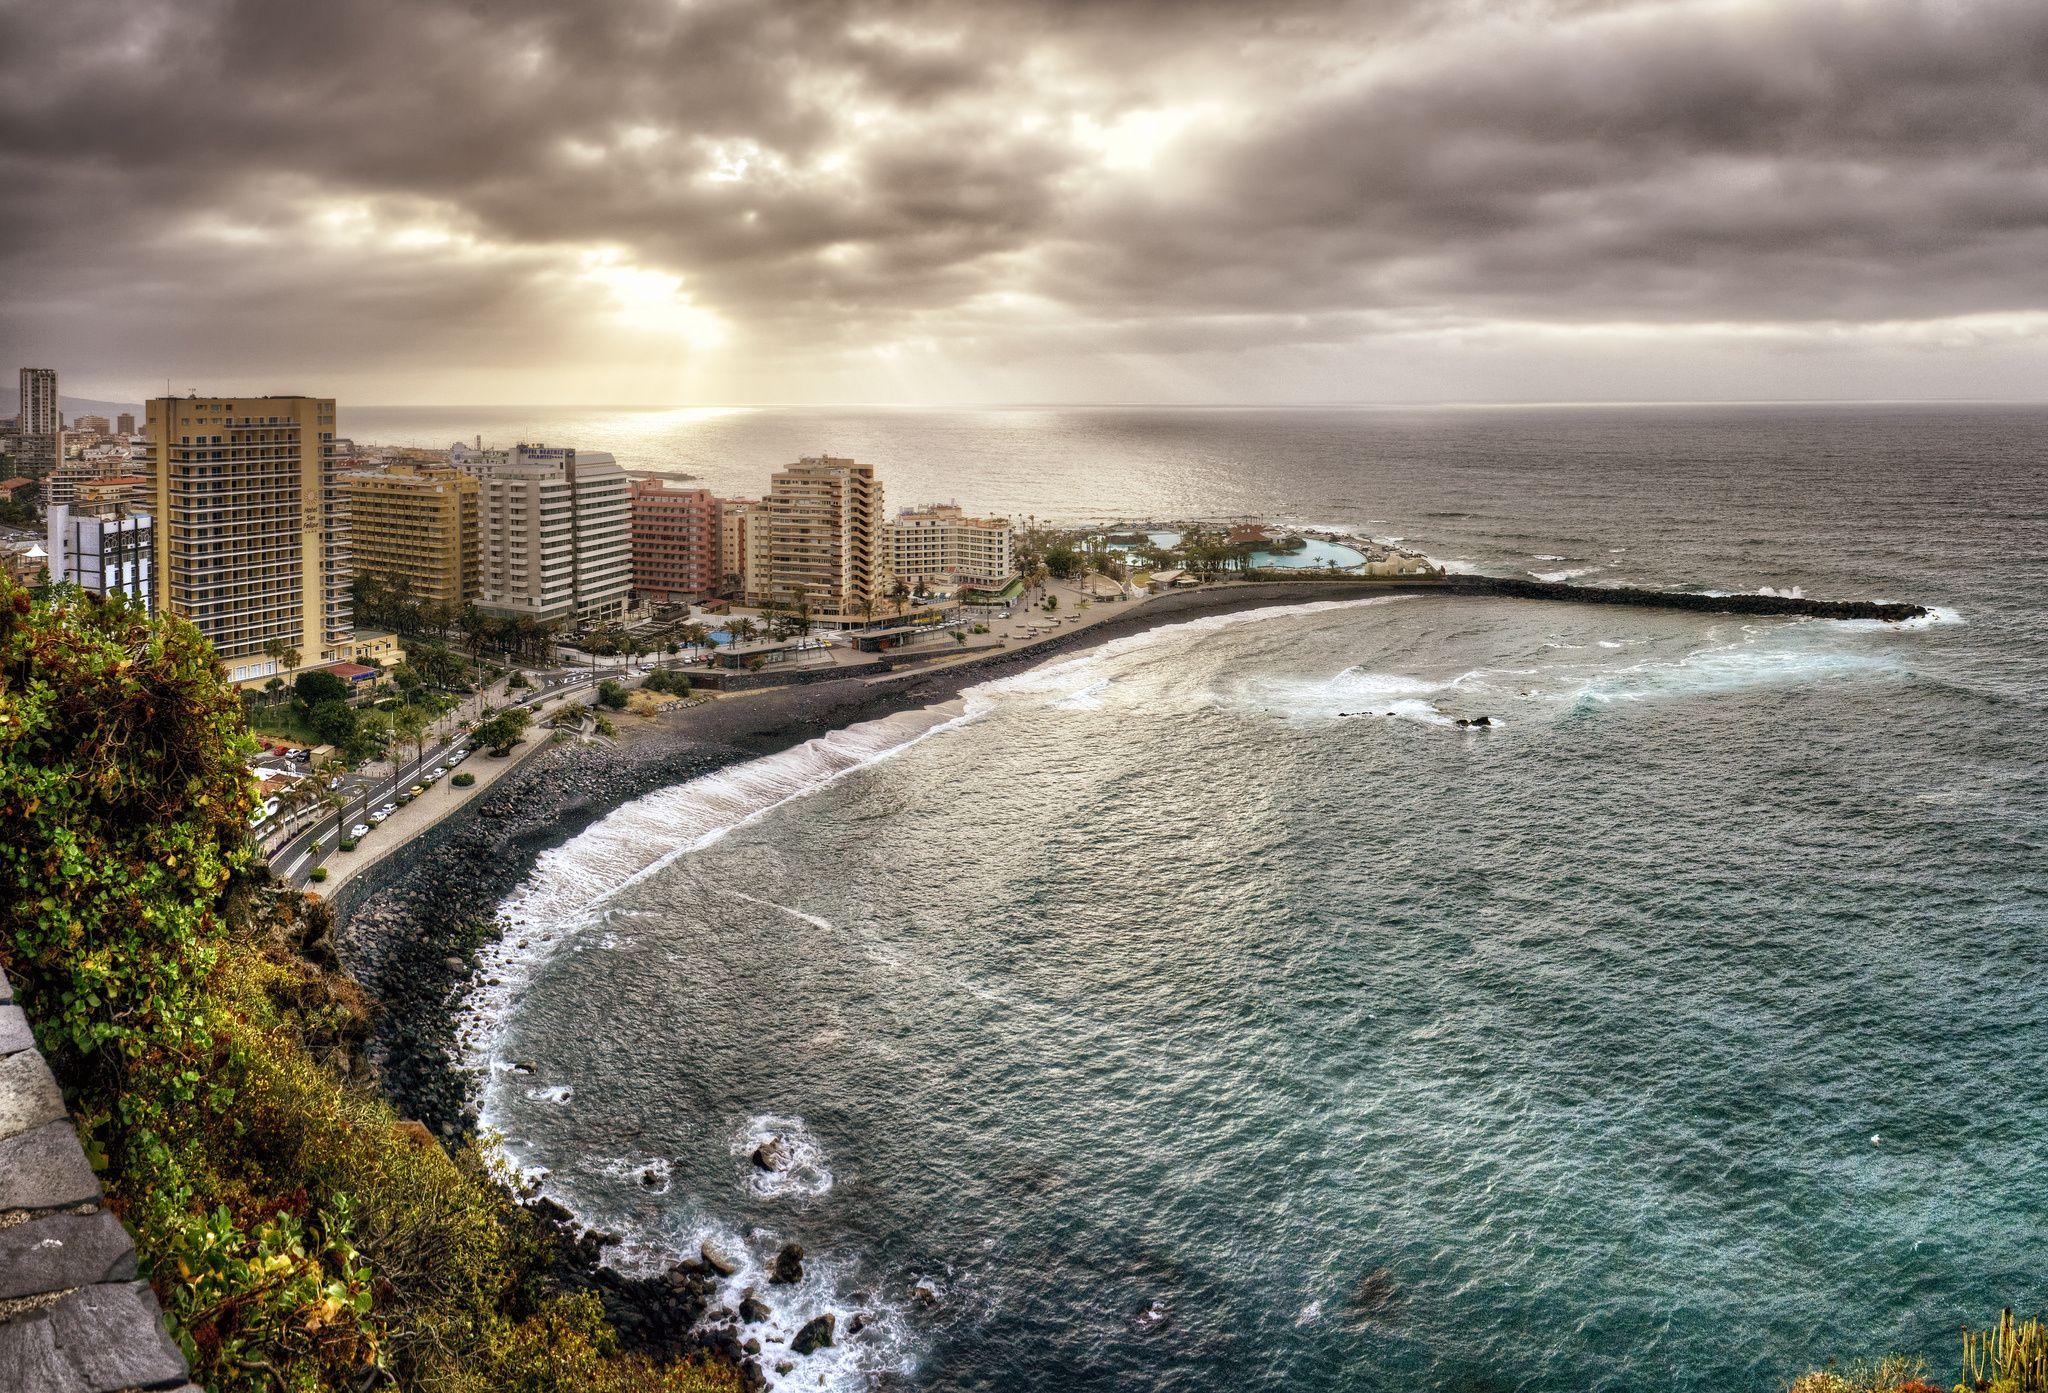 Canary Islands Atlantic Ocean coast buildings ocean landscape